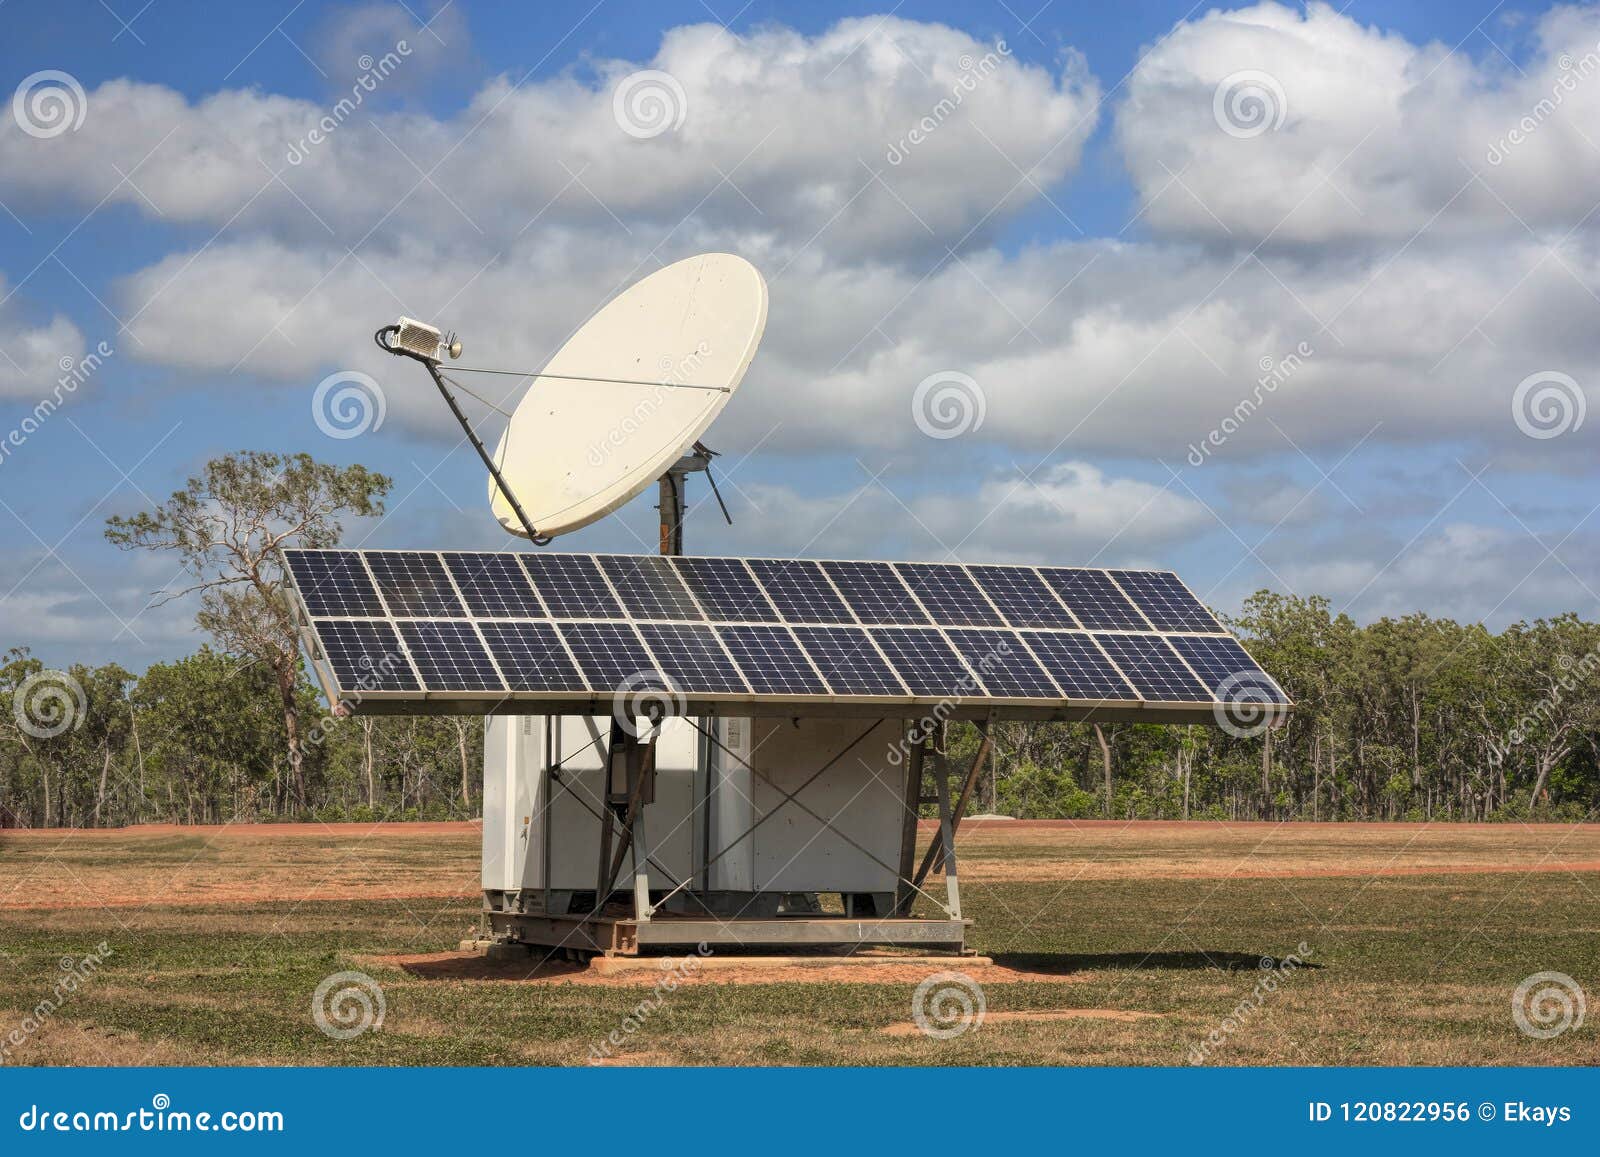 solar panels and satelite disc